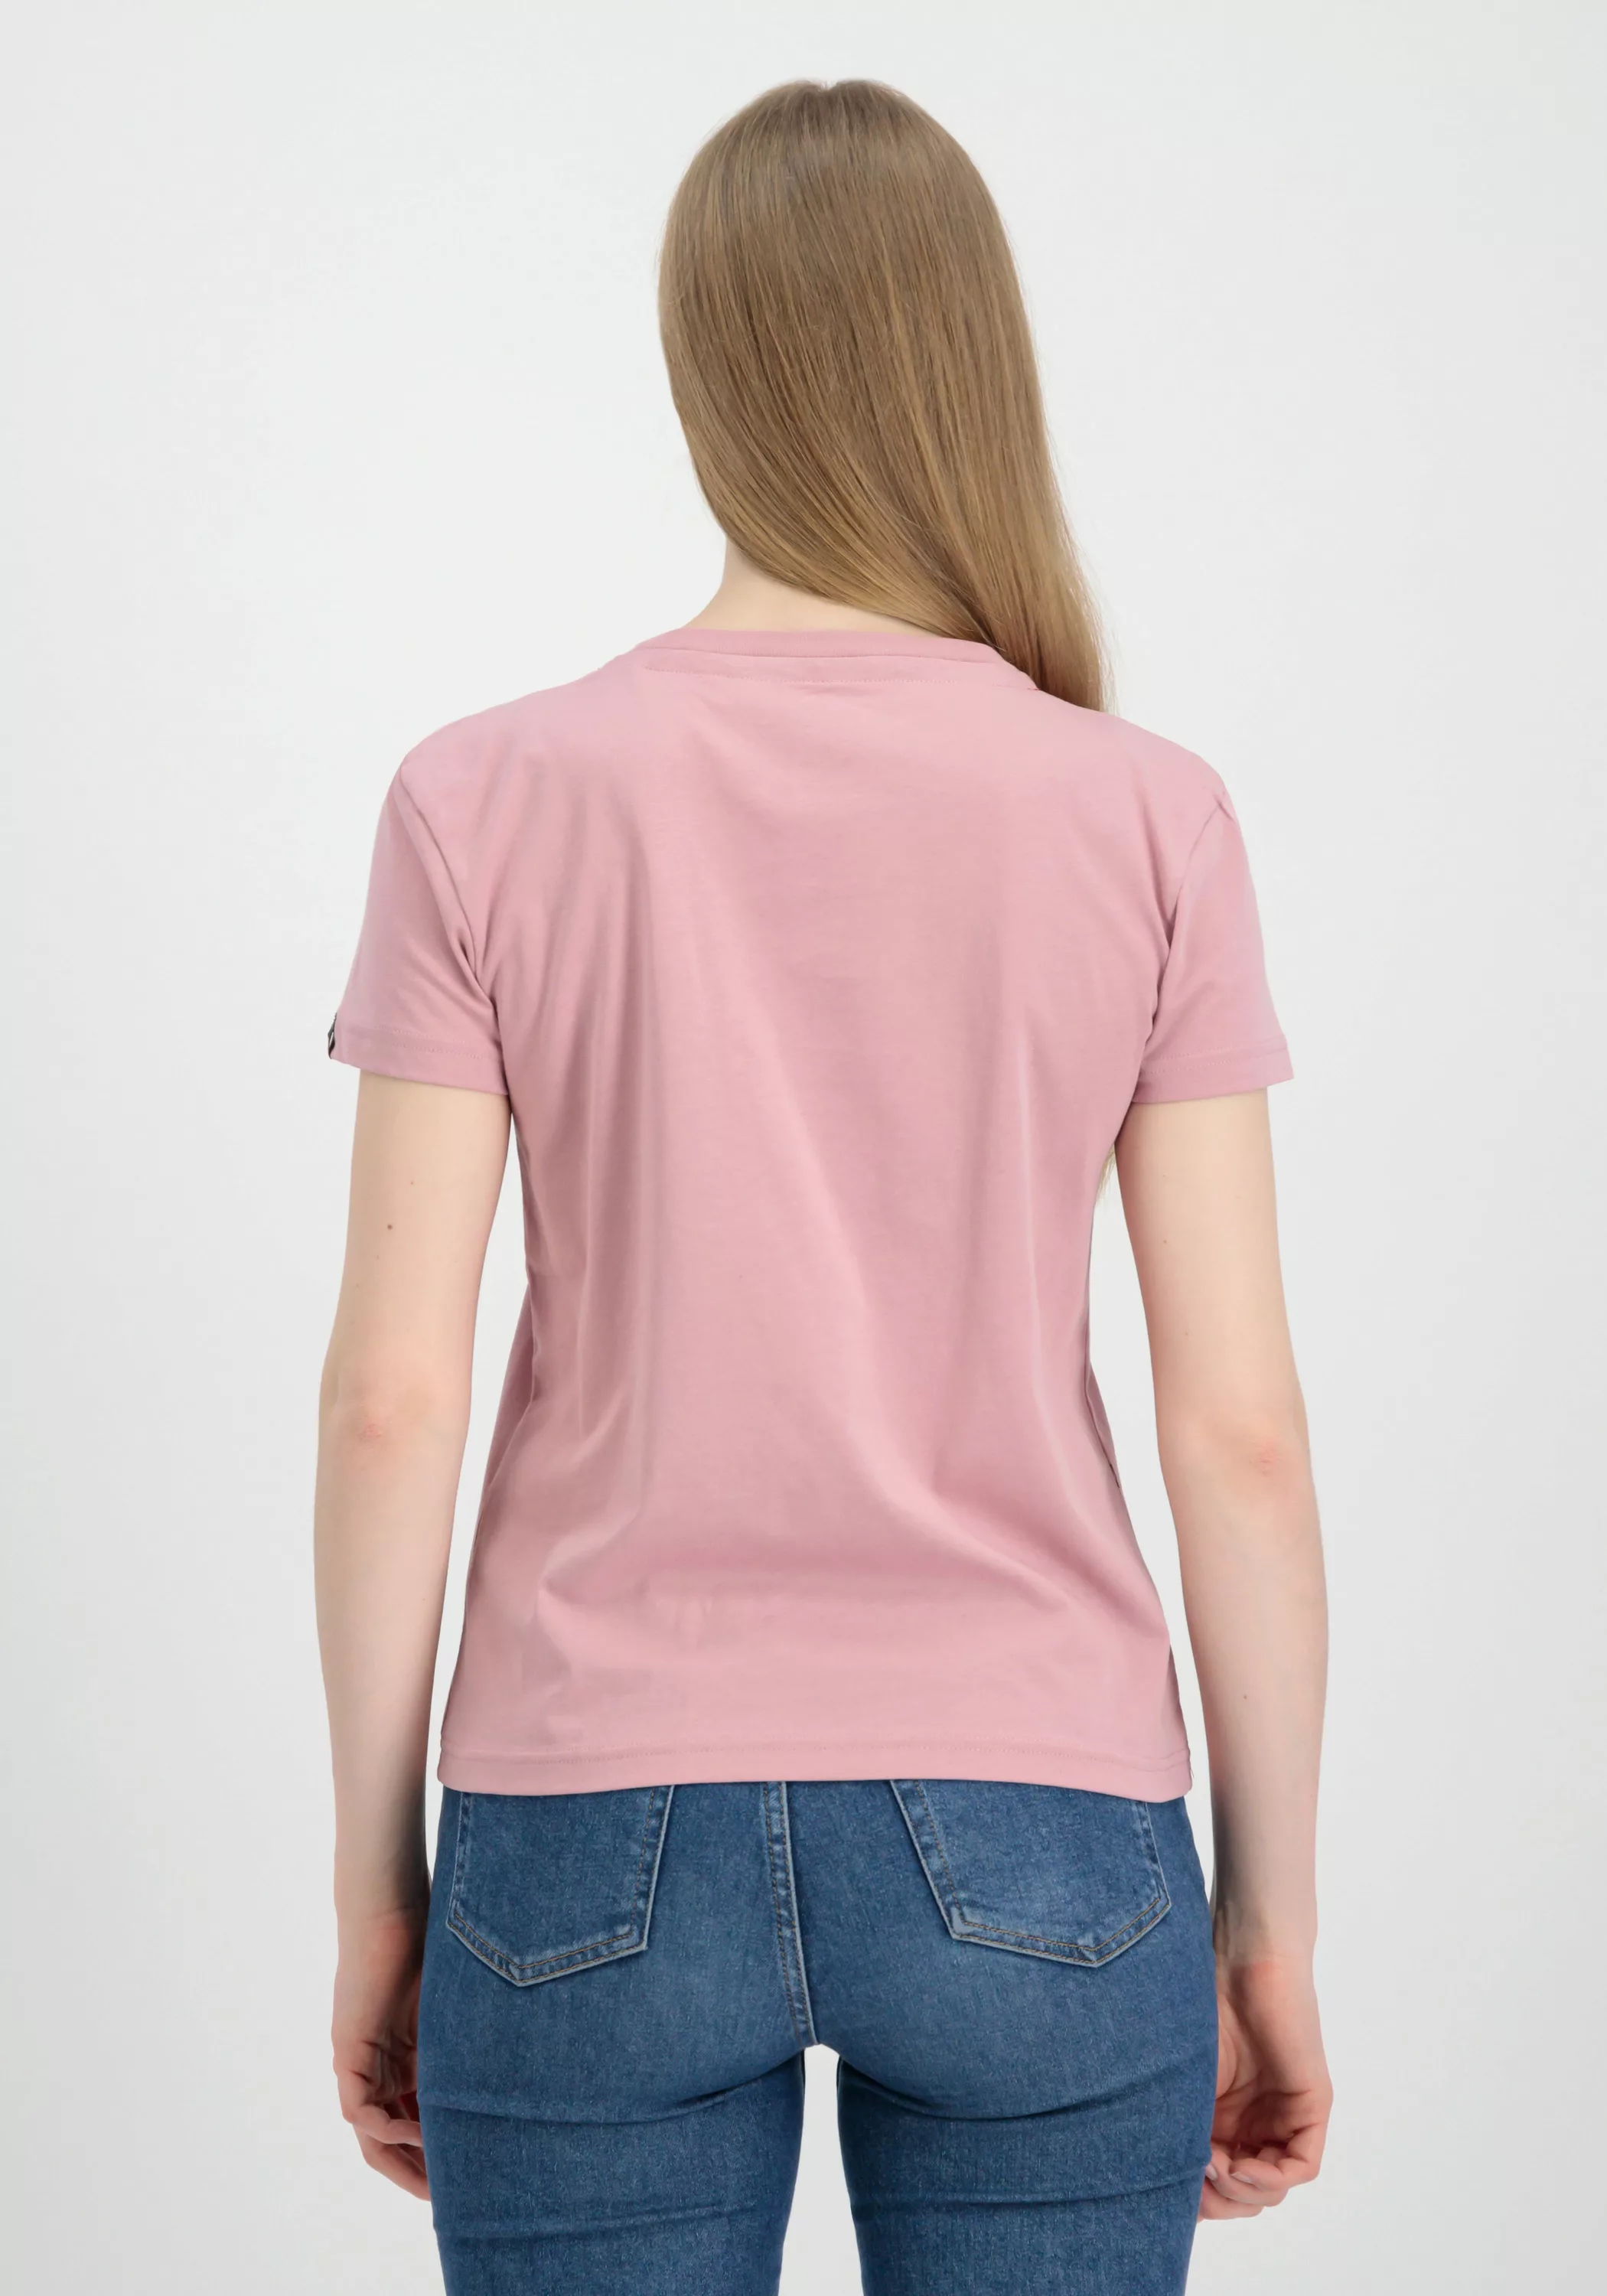 Alpha Industries T-Shirt "ALPHA INDUSTRIES Women - T-Shirts Crystal T Wmn" günstig online kaufen